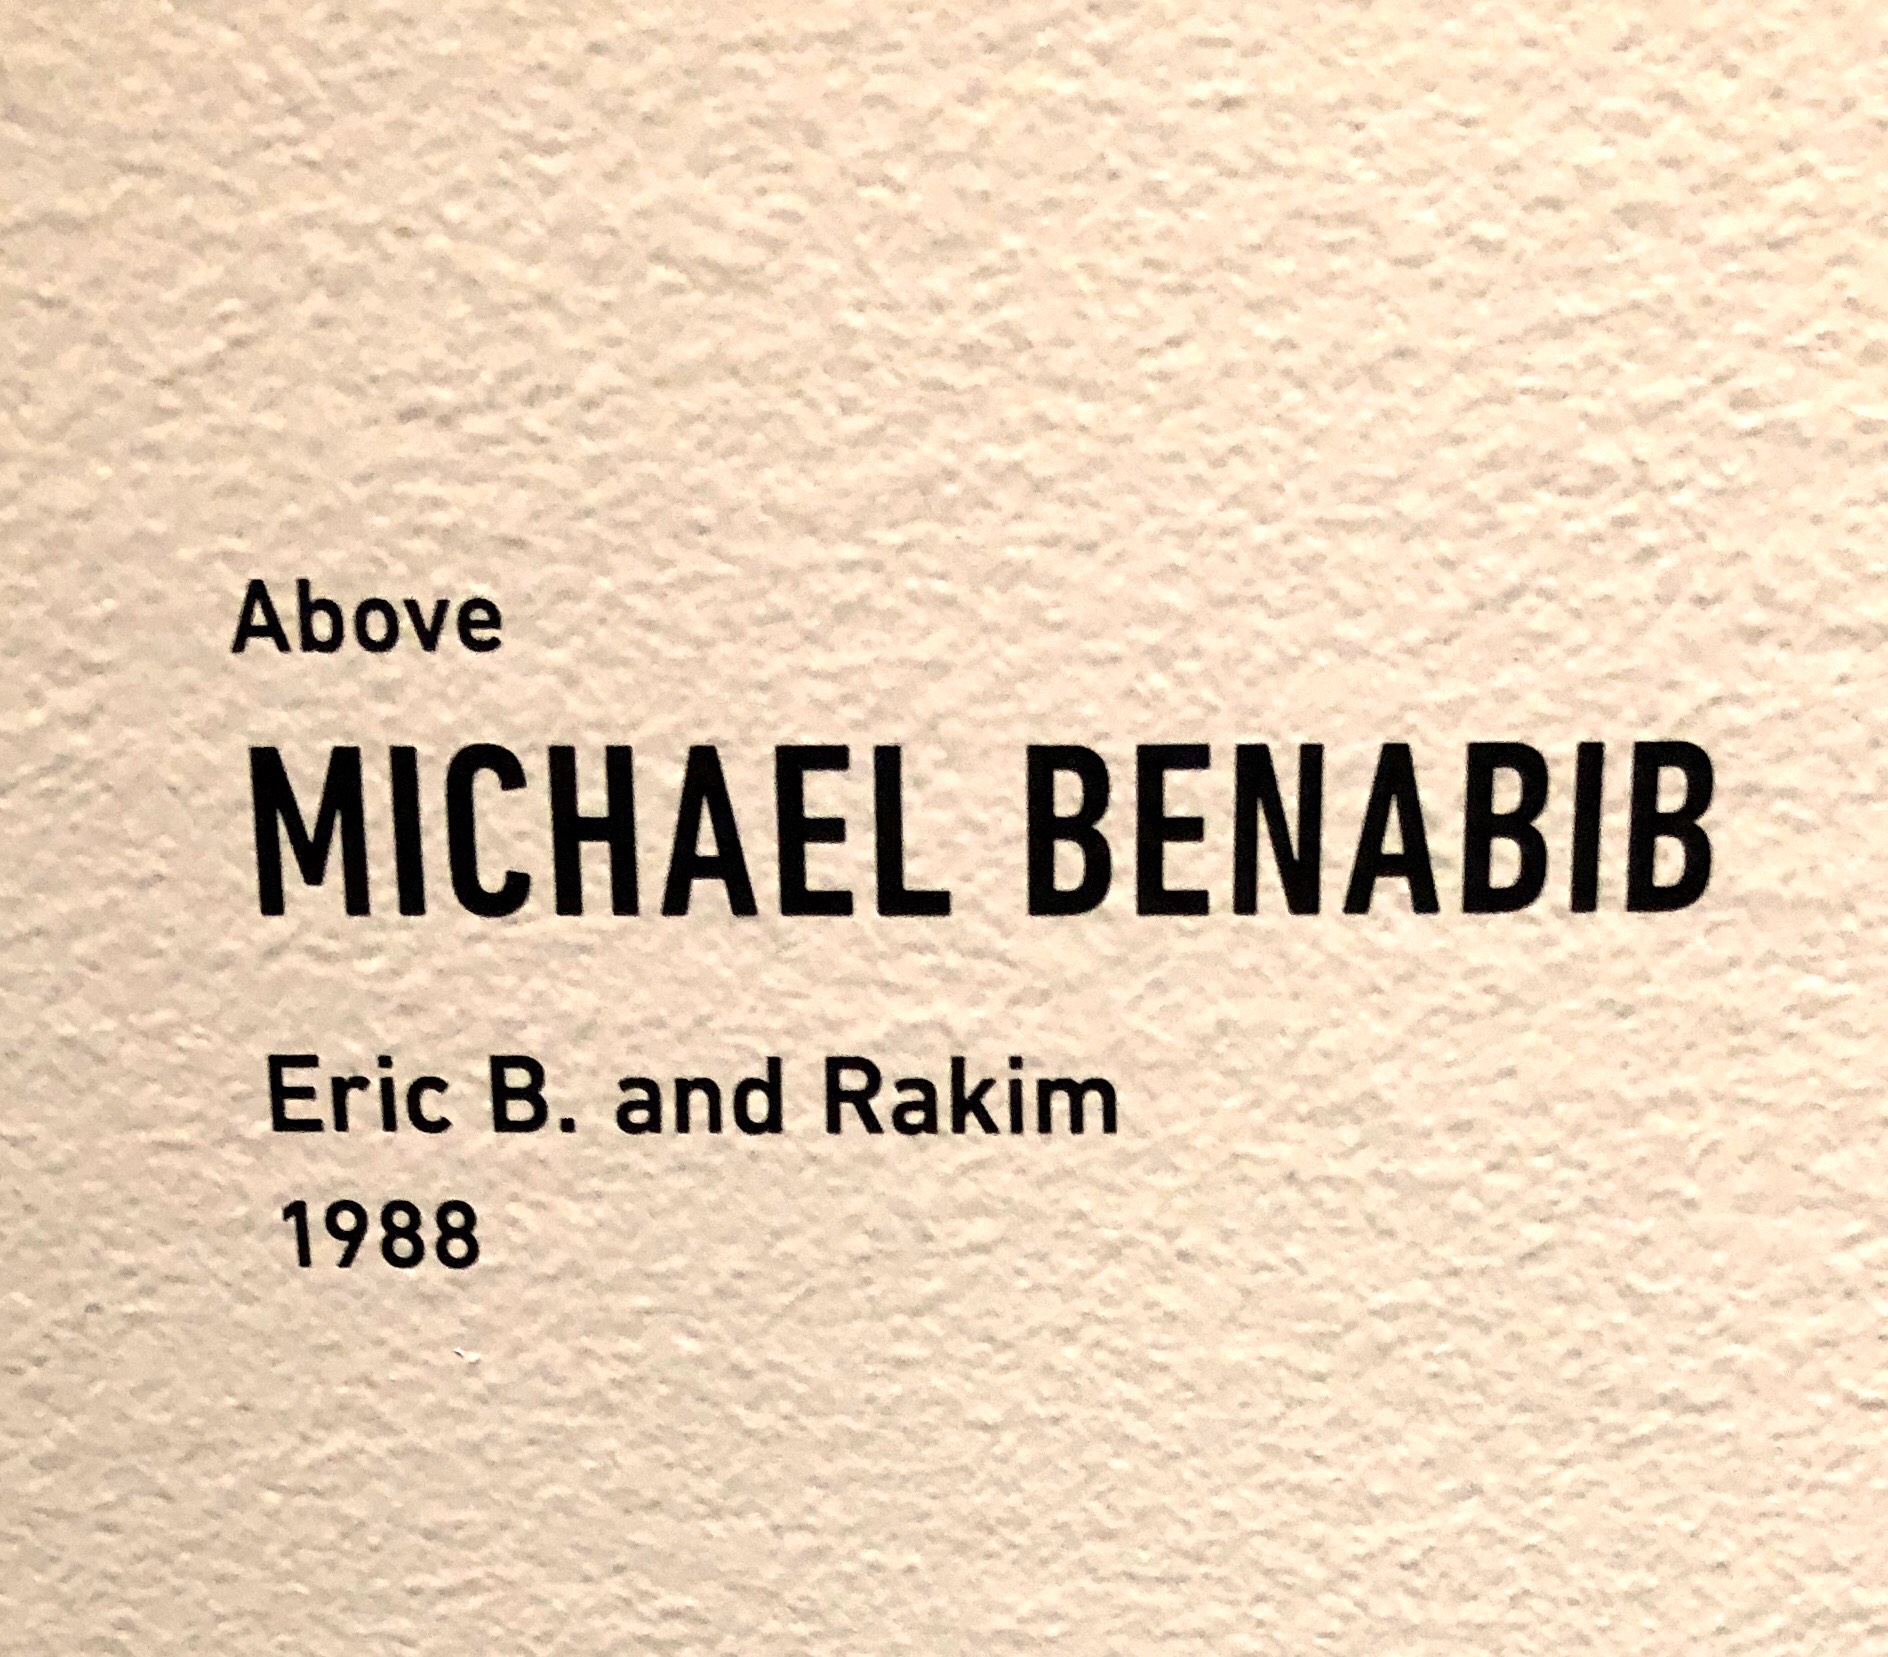 Michael Benabib title card for Eric B Rakim display